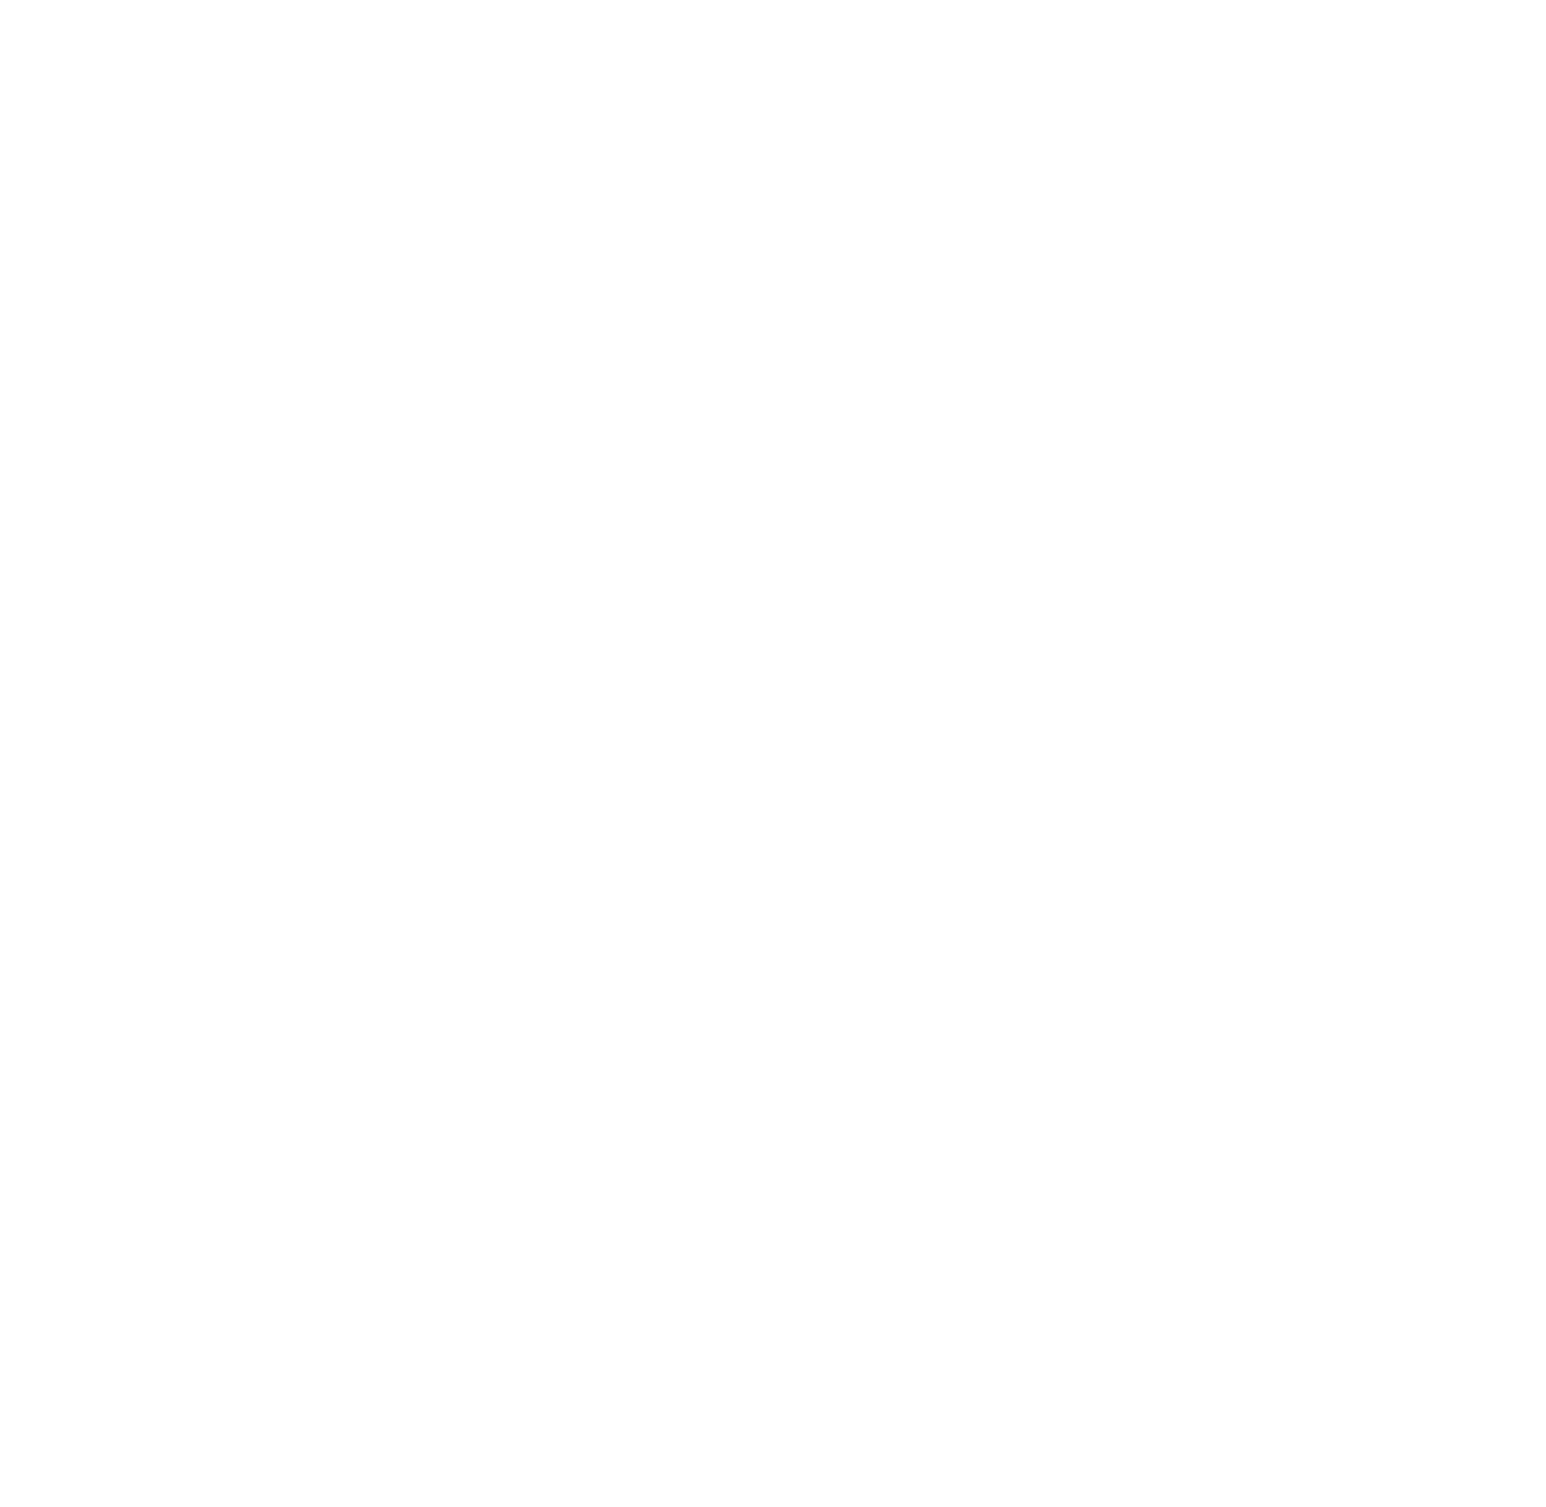 Github logo for dark backgrounds (transparent PNG)